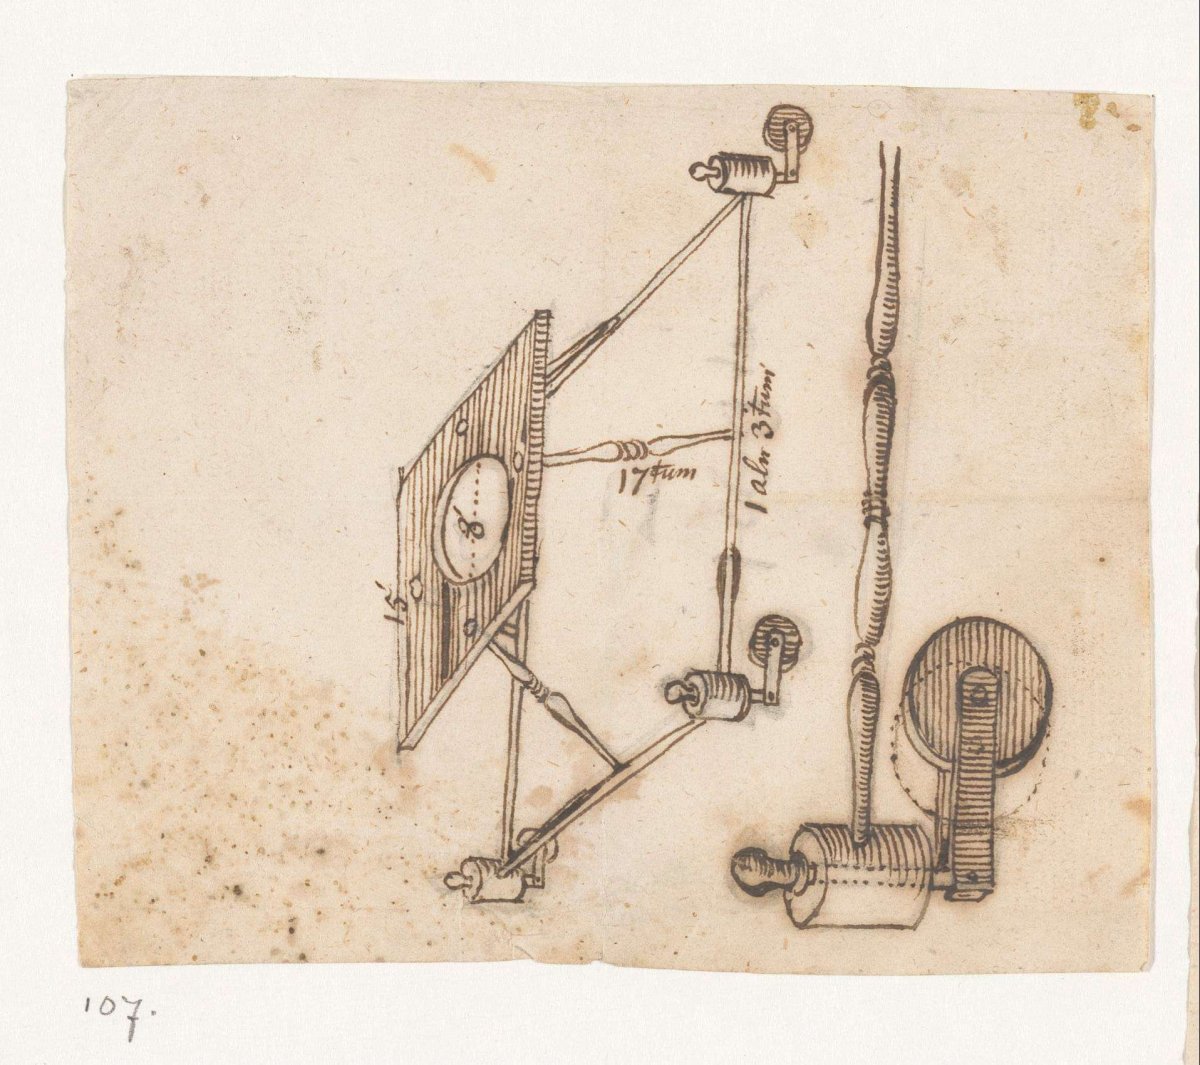 Verrijdbare lens, Jan Brandes, 1787 - 1808